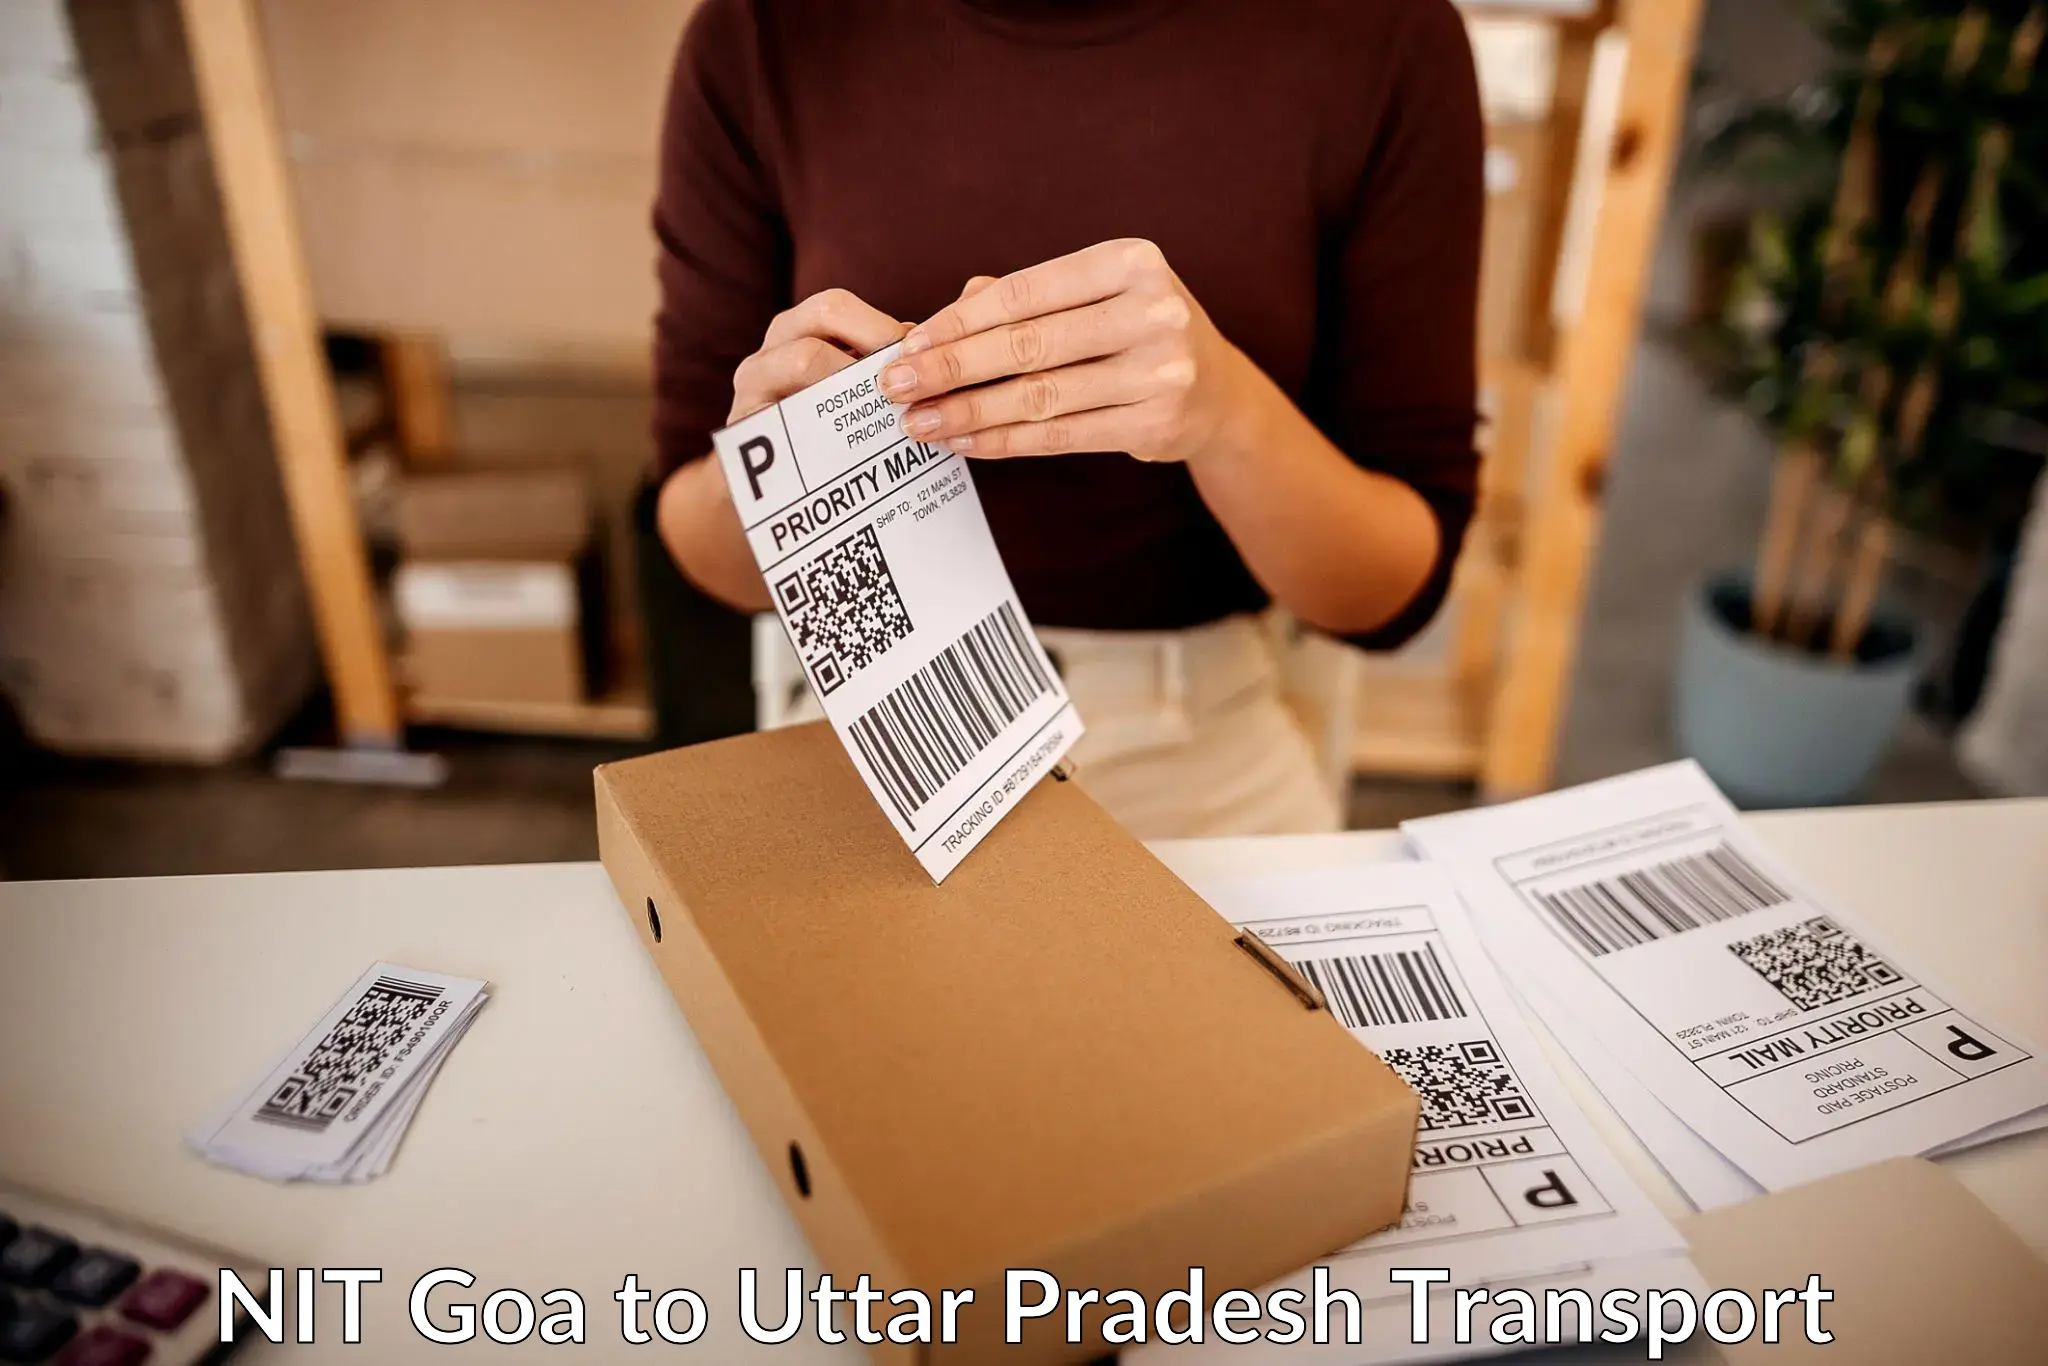 Furniture transport service NIT Goa to Agra